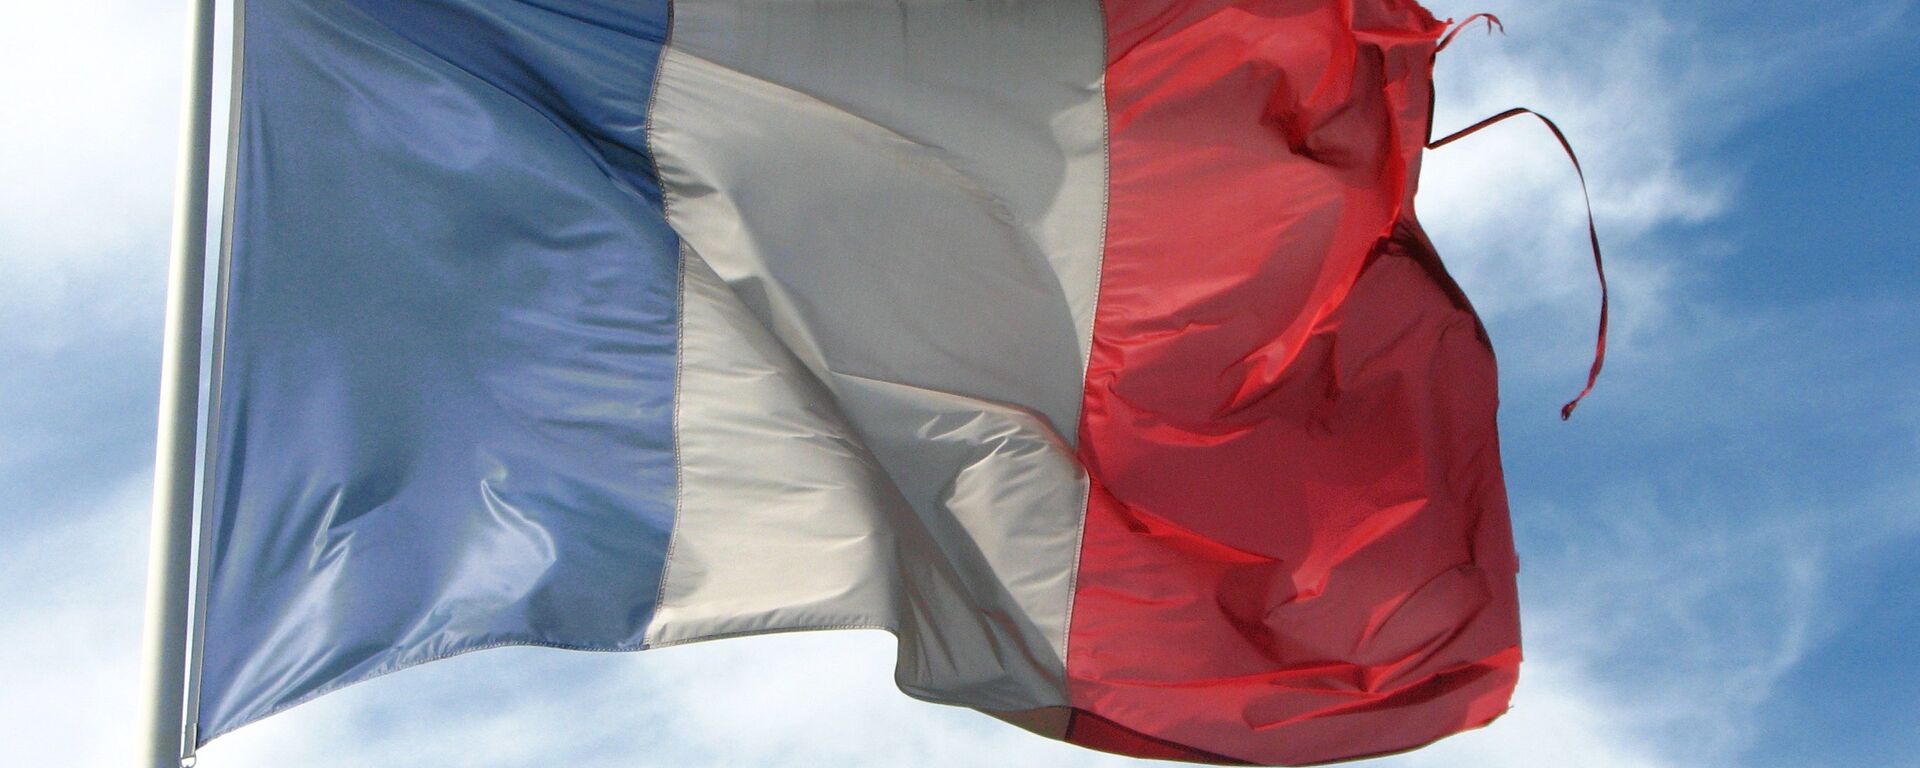 La bandera de Francia - Sputnik Mundo, 1920, 29.10.2021